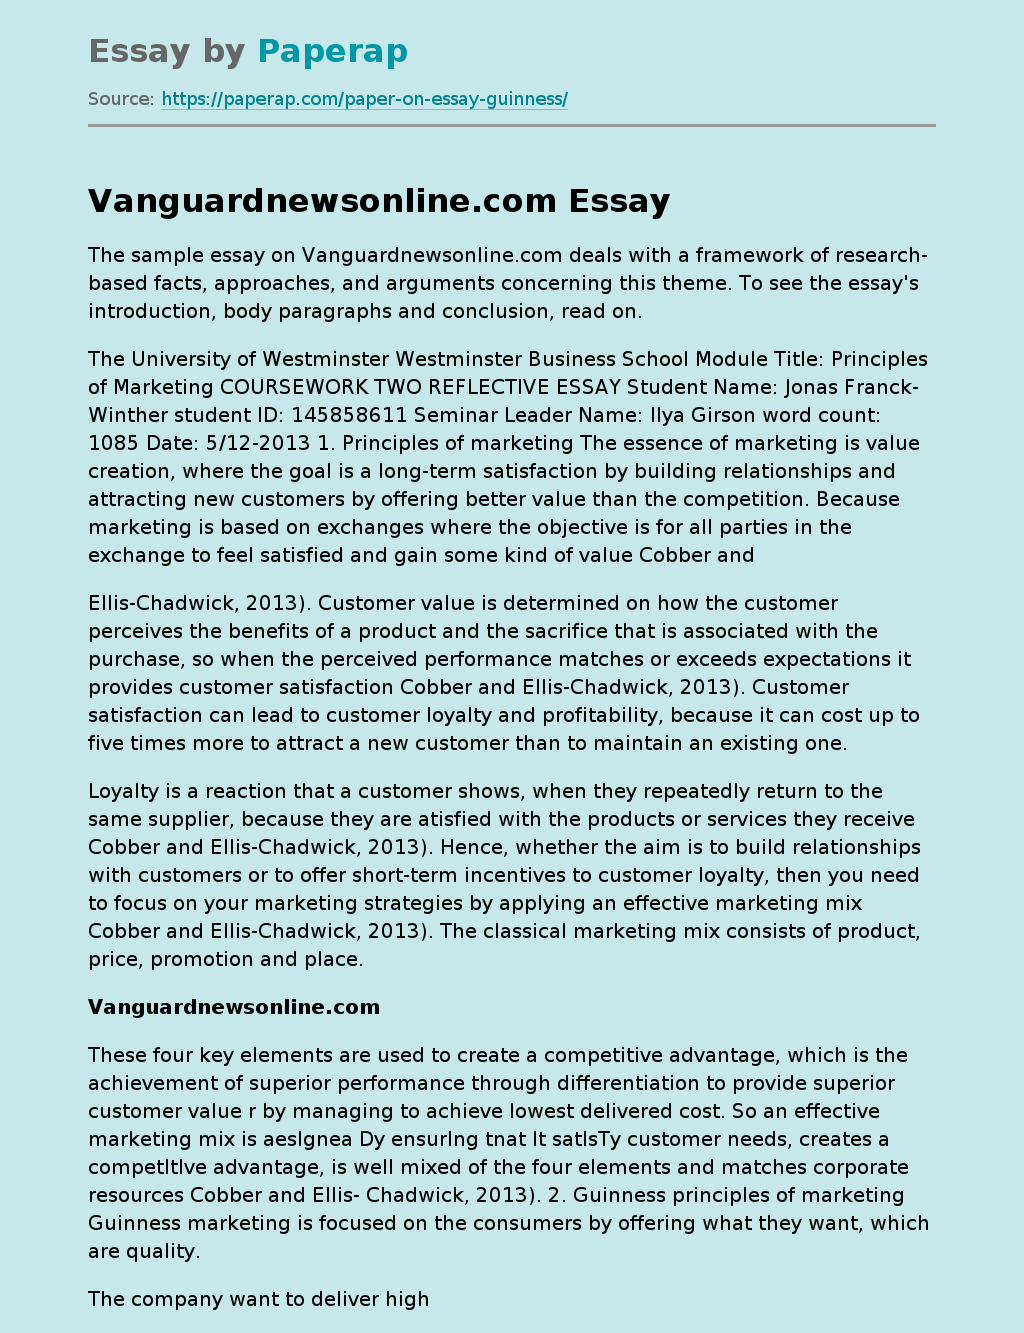 Vanguardnewsonline.com